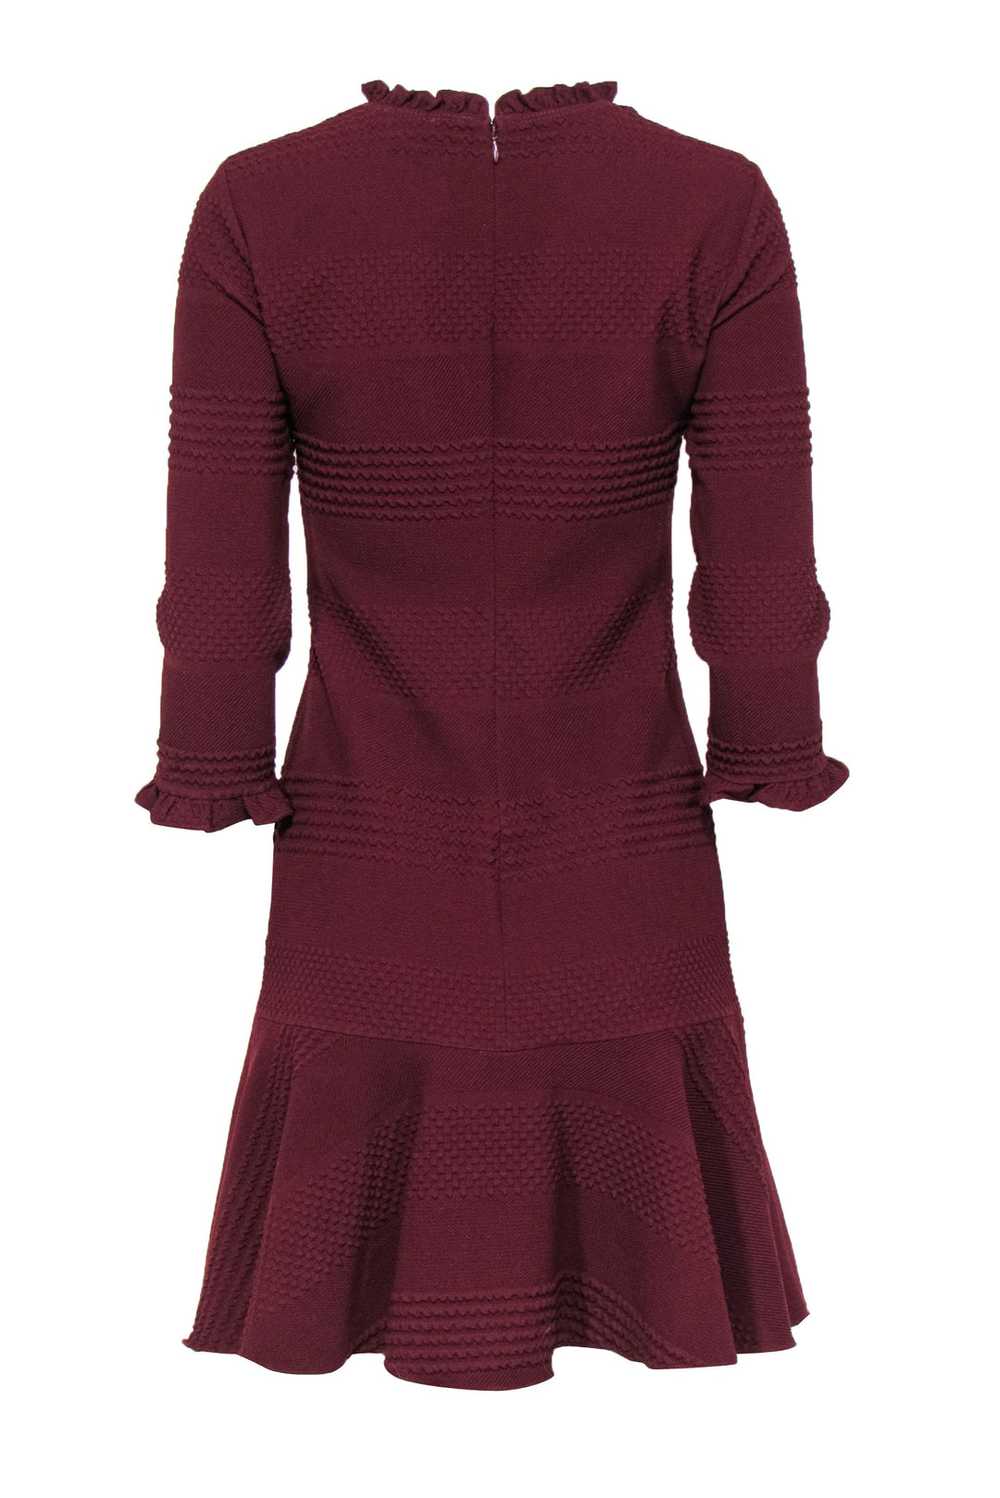 Shoshanna - Maroon Textured Ruffled Sheath Dress … - image 3